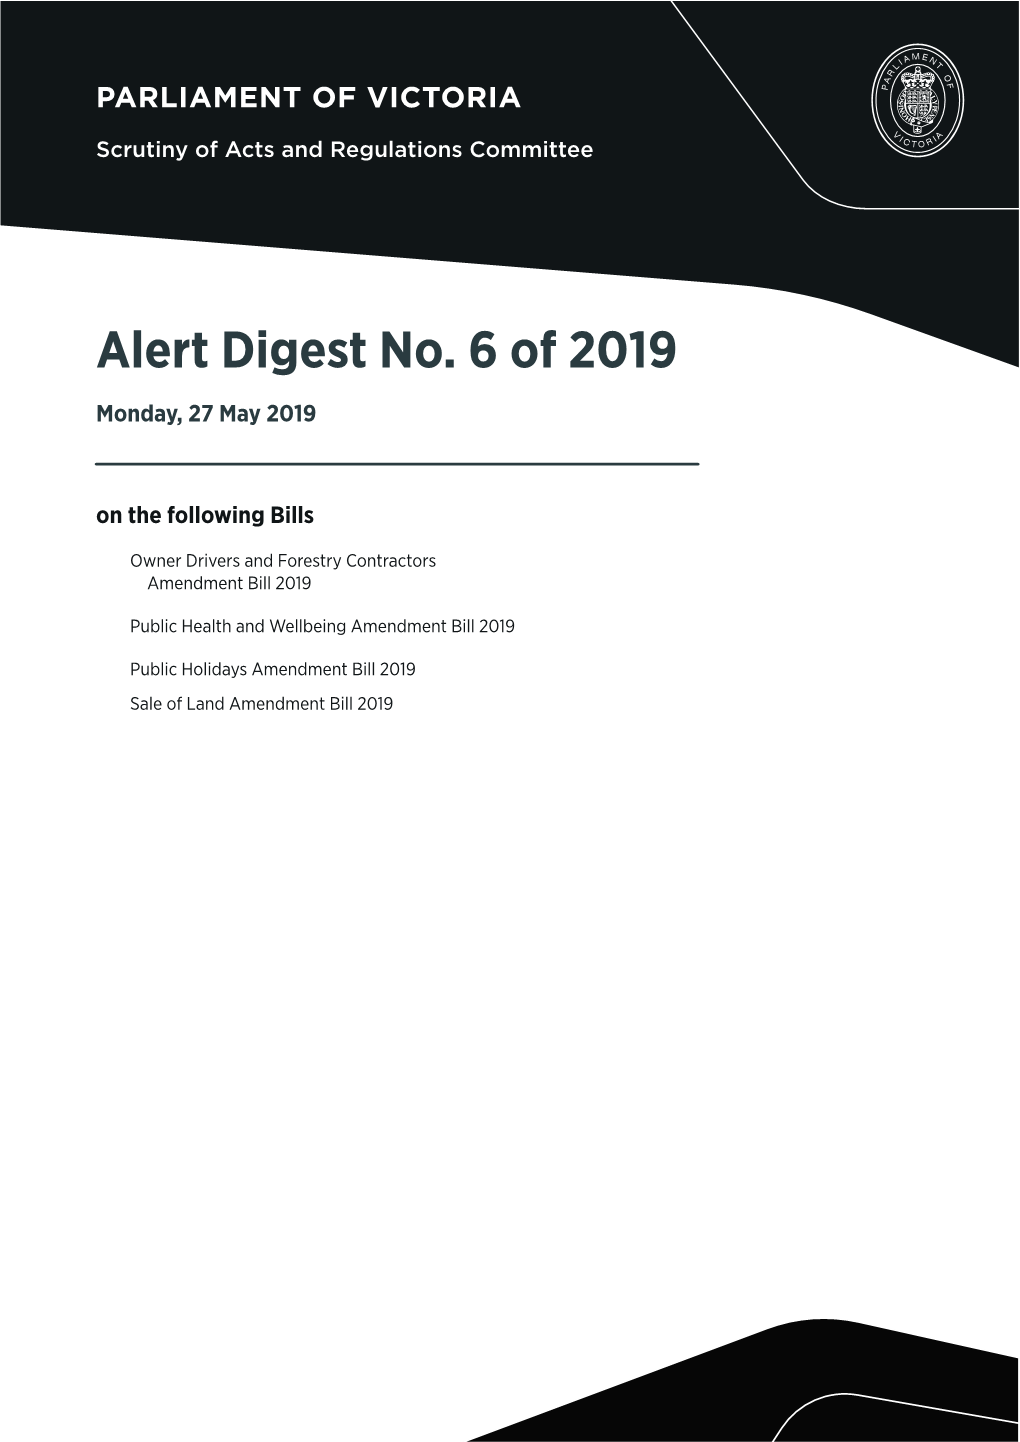 Alert Digest No. 6 of 2019